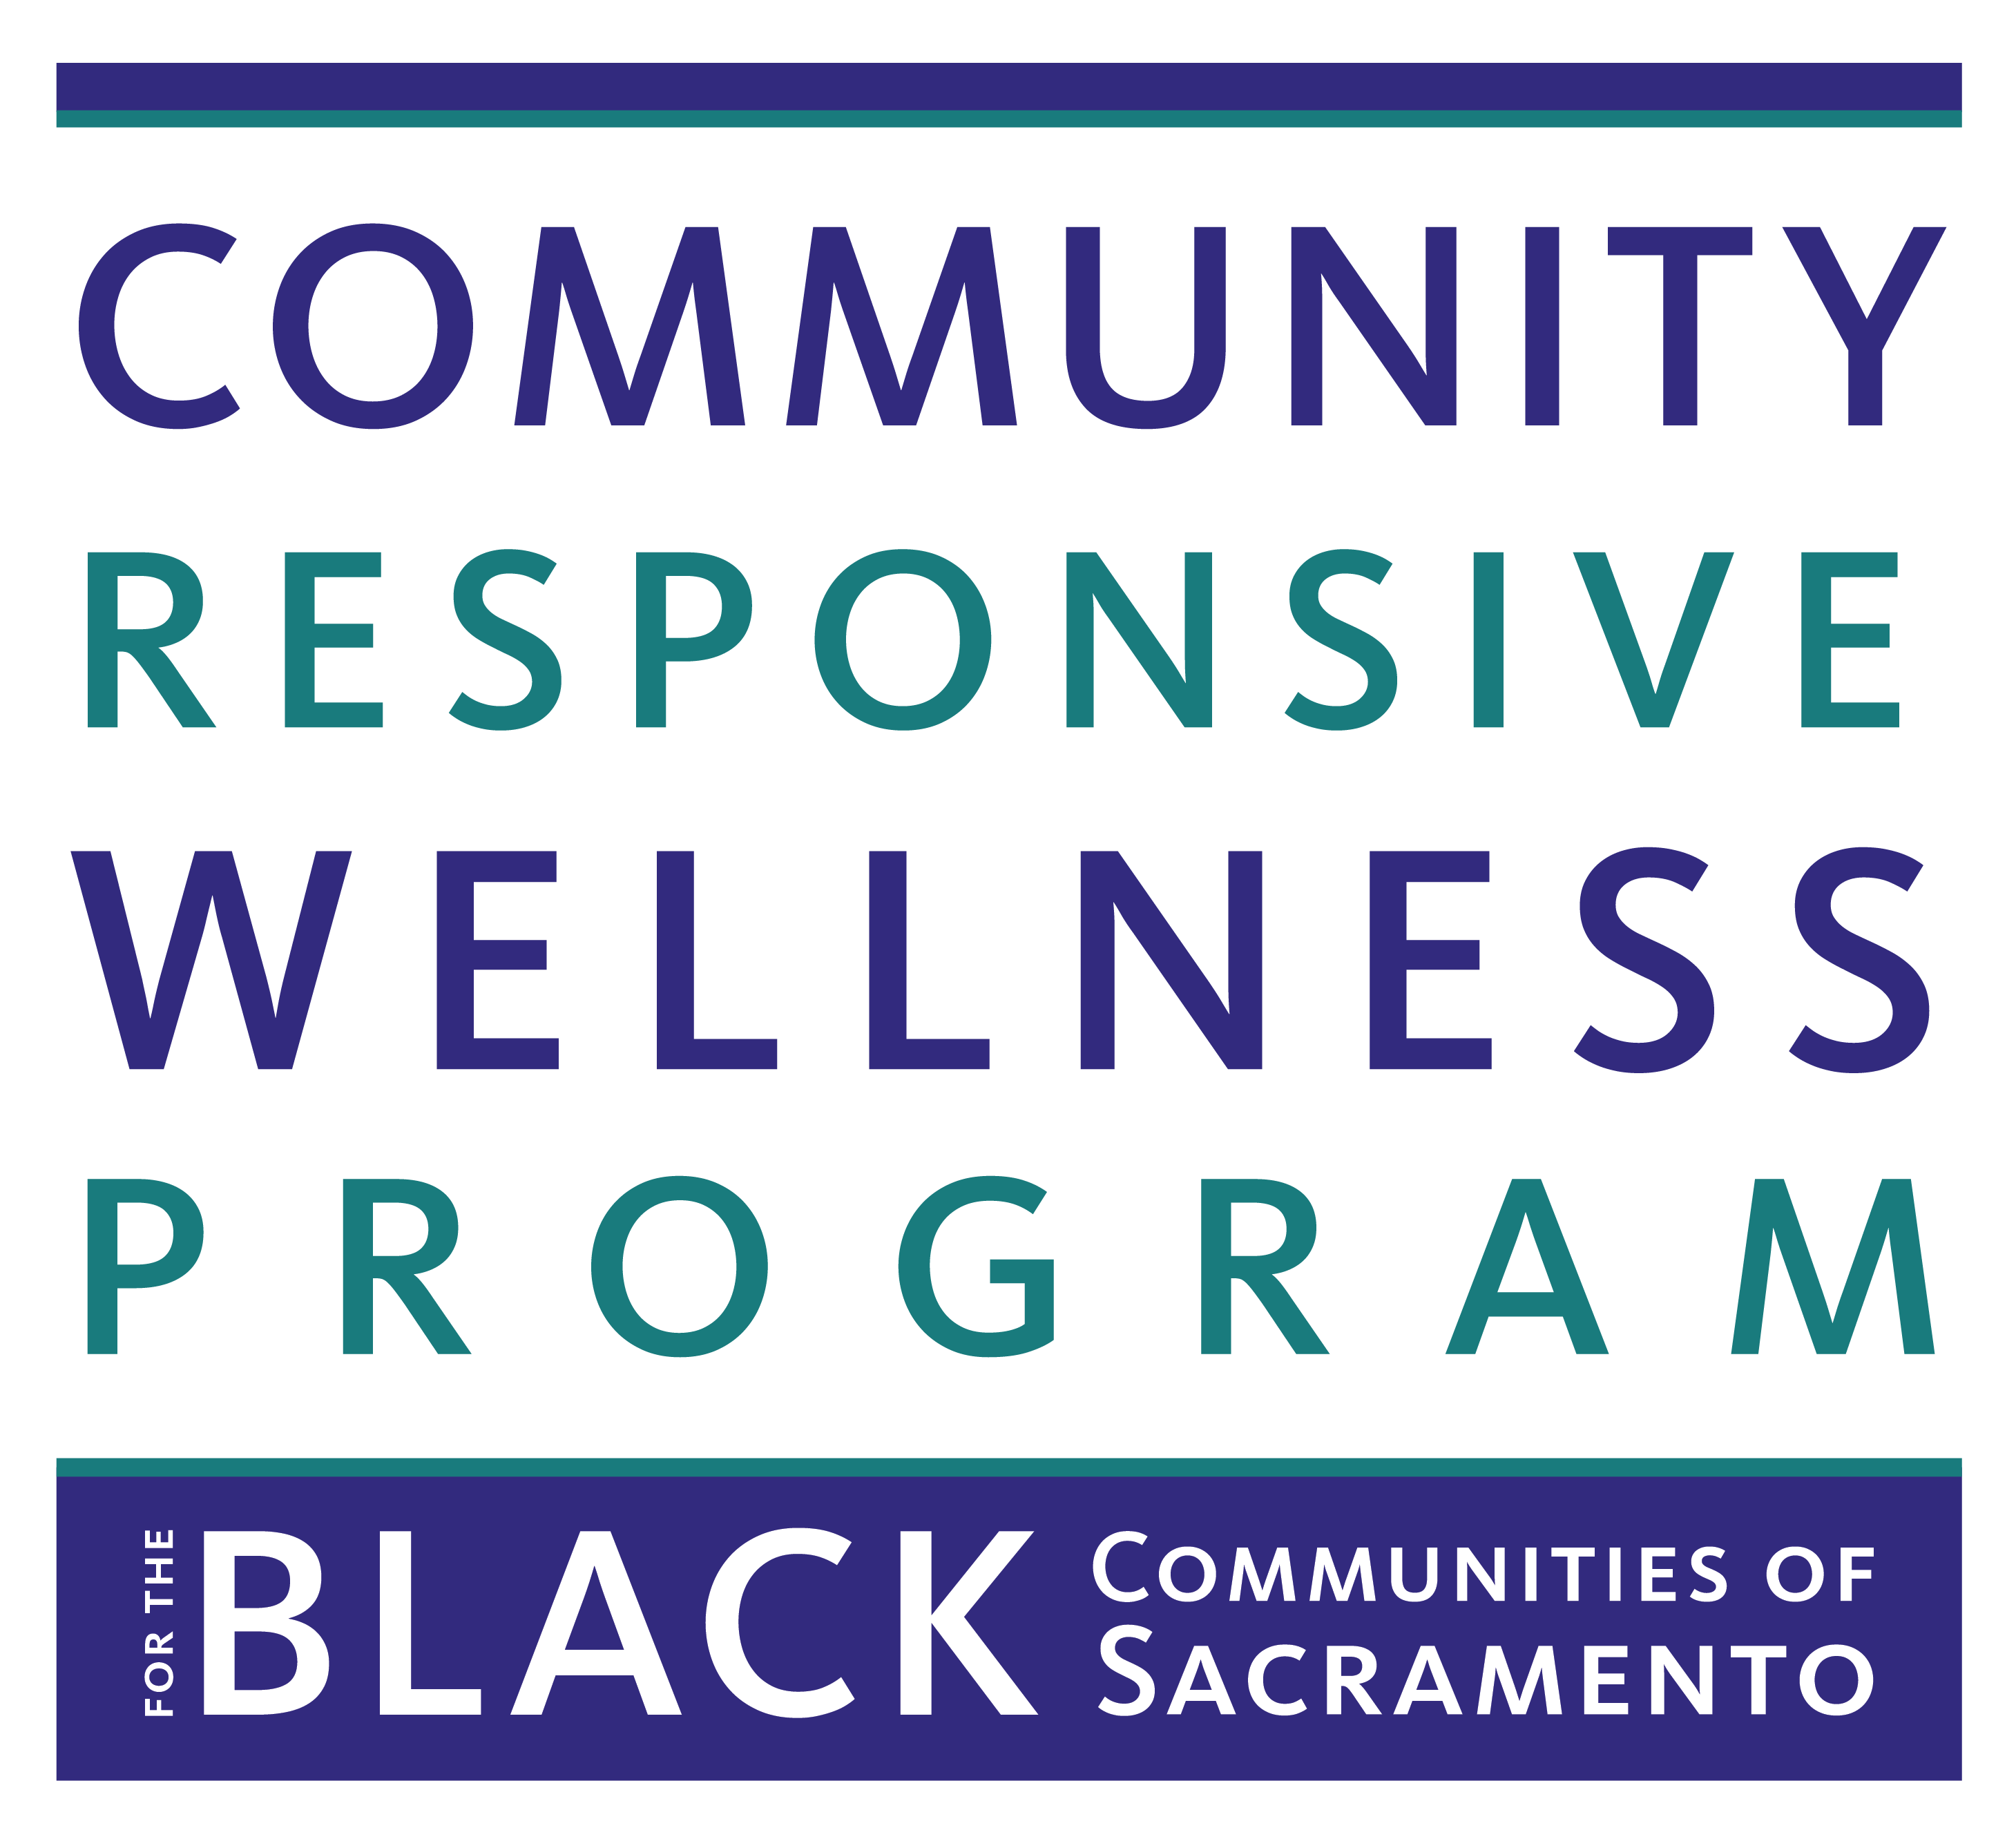 Pictured: Community Responsive Wellness Programs for the Black Communities of Sacramento logo